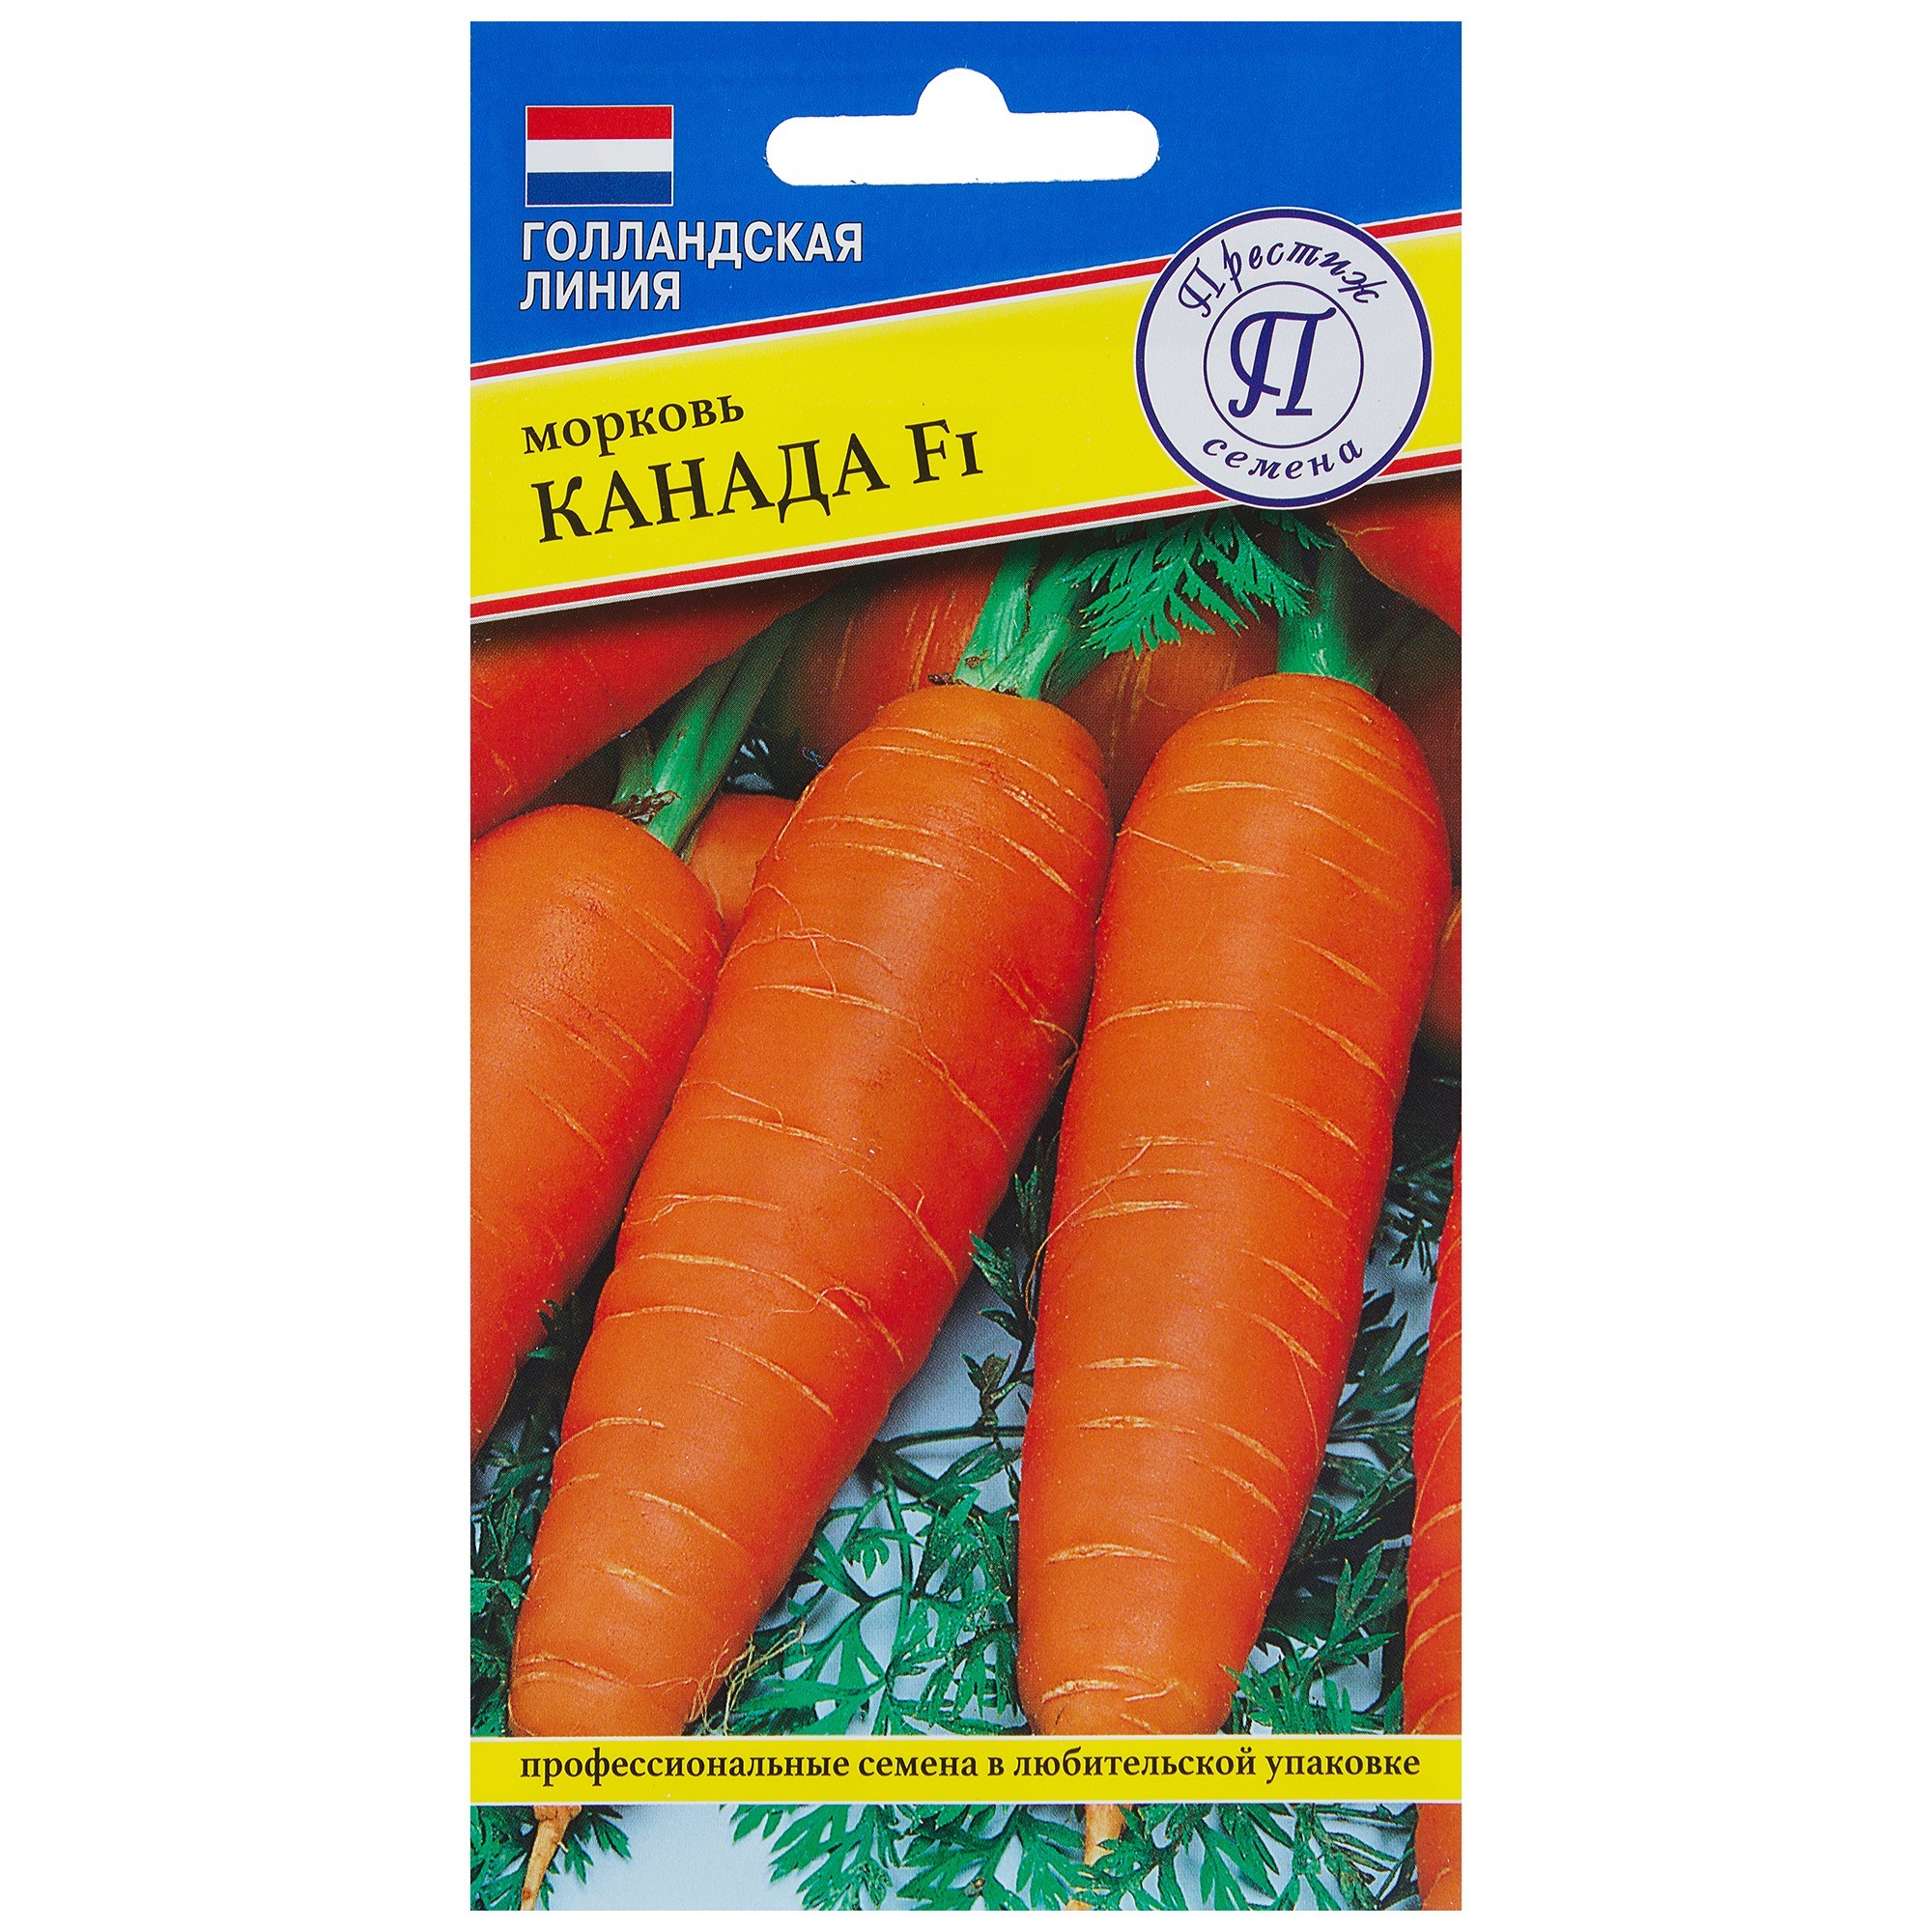 Семена с f1 можно собирать. Семена. Морковь "Канада f1". Сорт моркови Канада f1. Престиж семена морковь Канада f1. Семена морковь болеро (10 шт.).